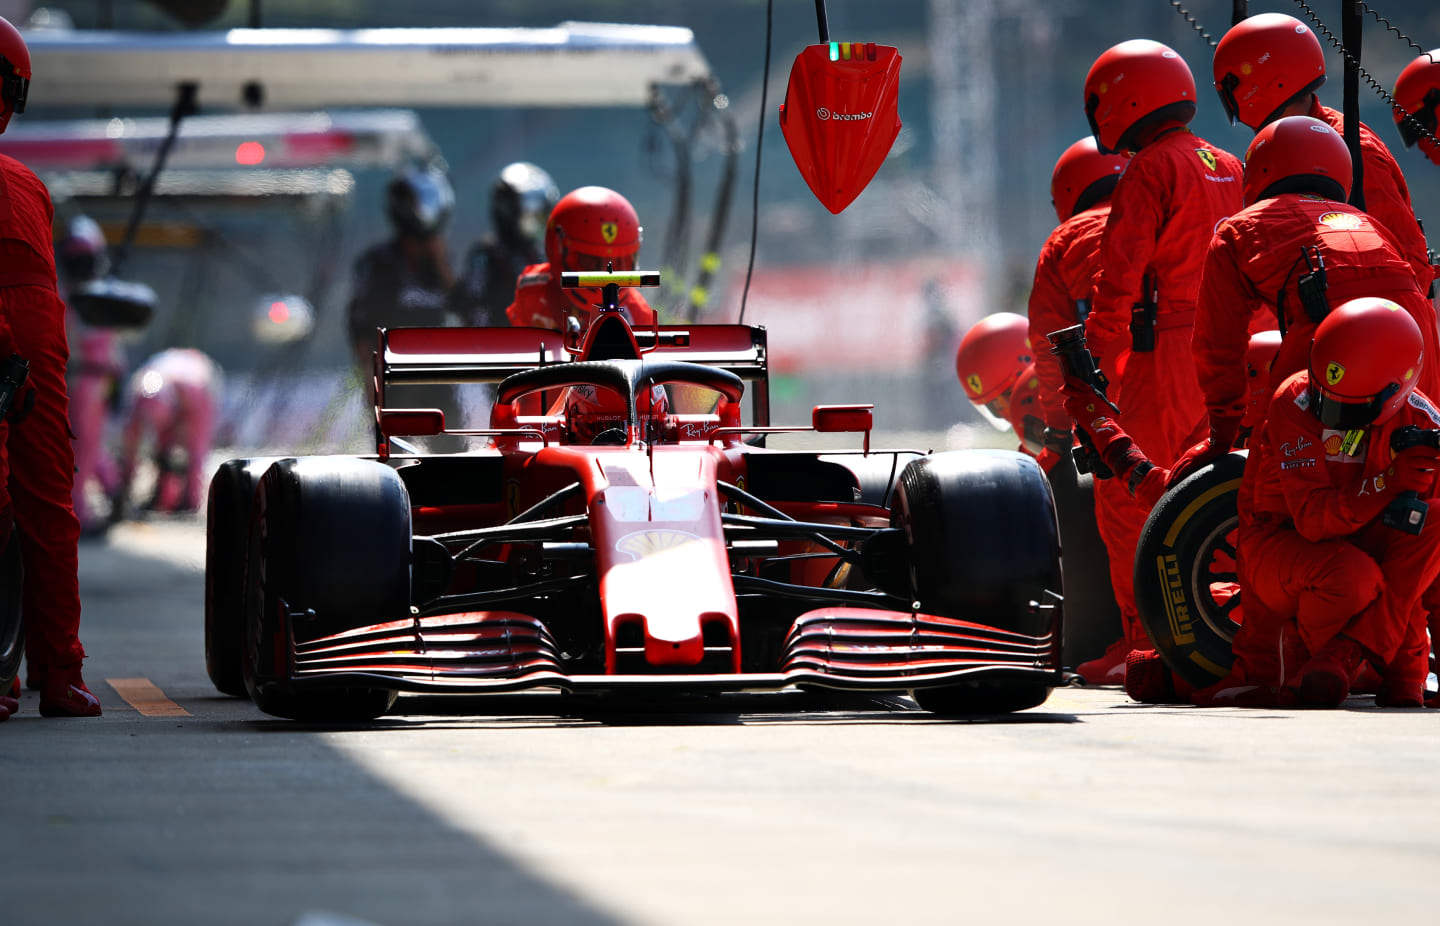 NORTHAMPTON, ENGLAND - AUGUST 09: Charles Leclerc of Monaco driving the (16) Scuderia Ferrari